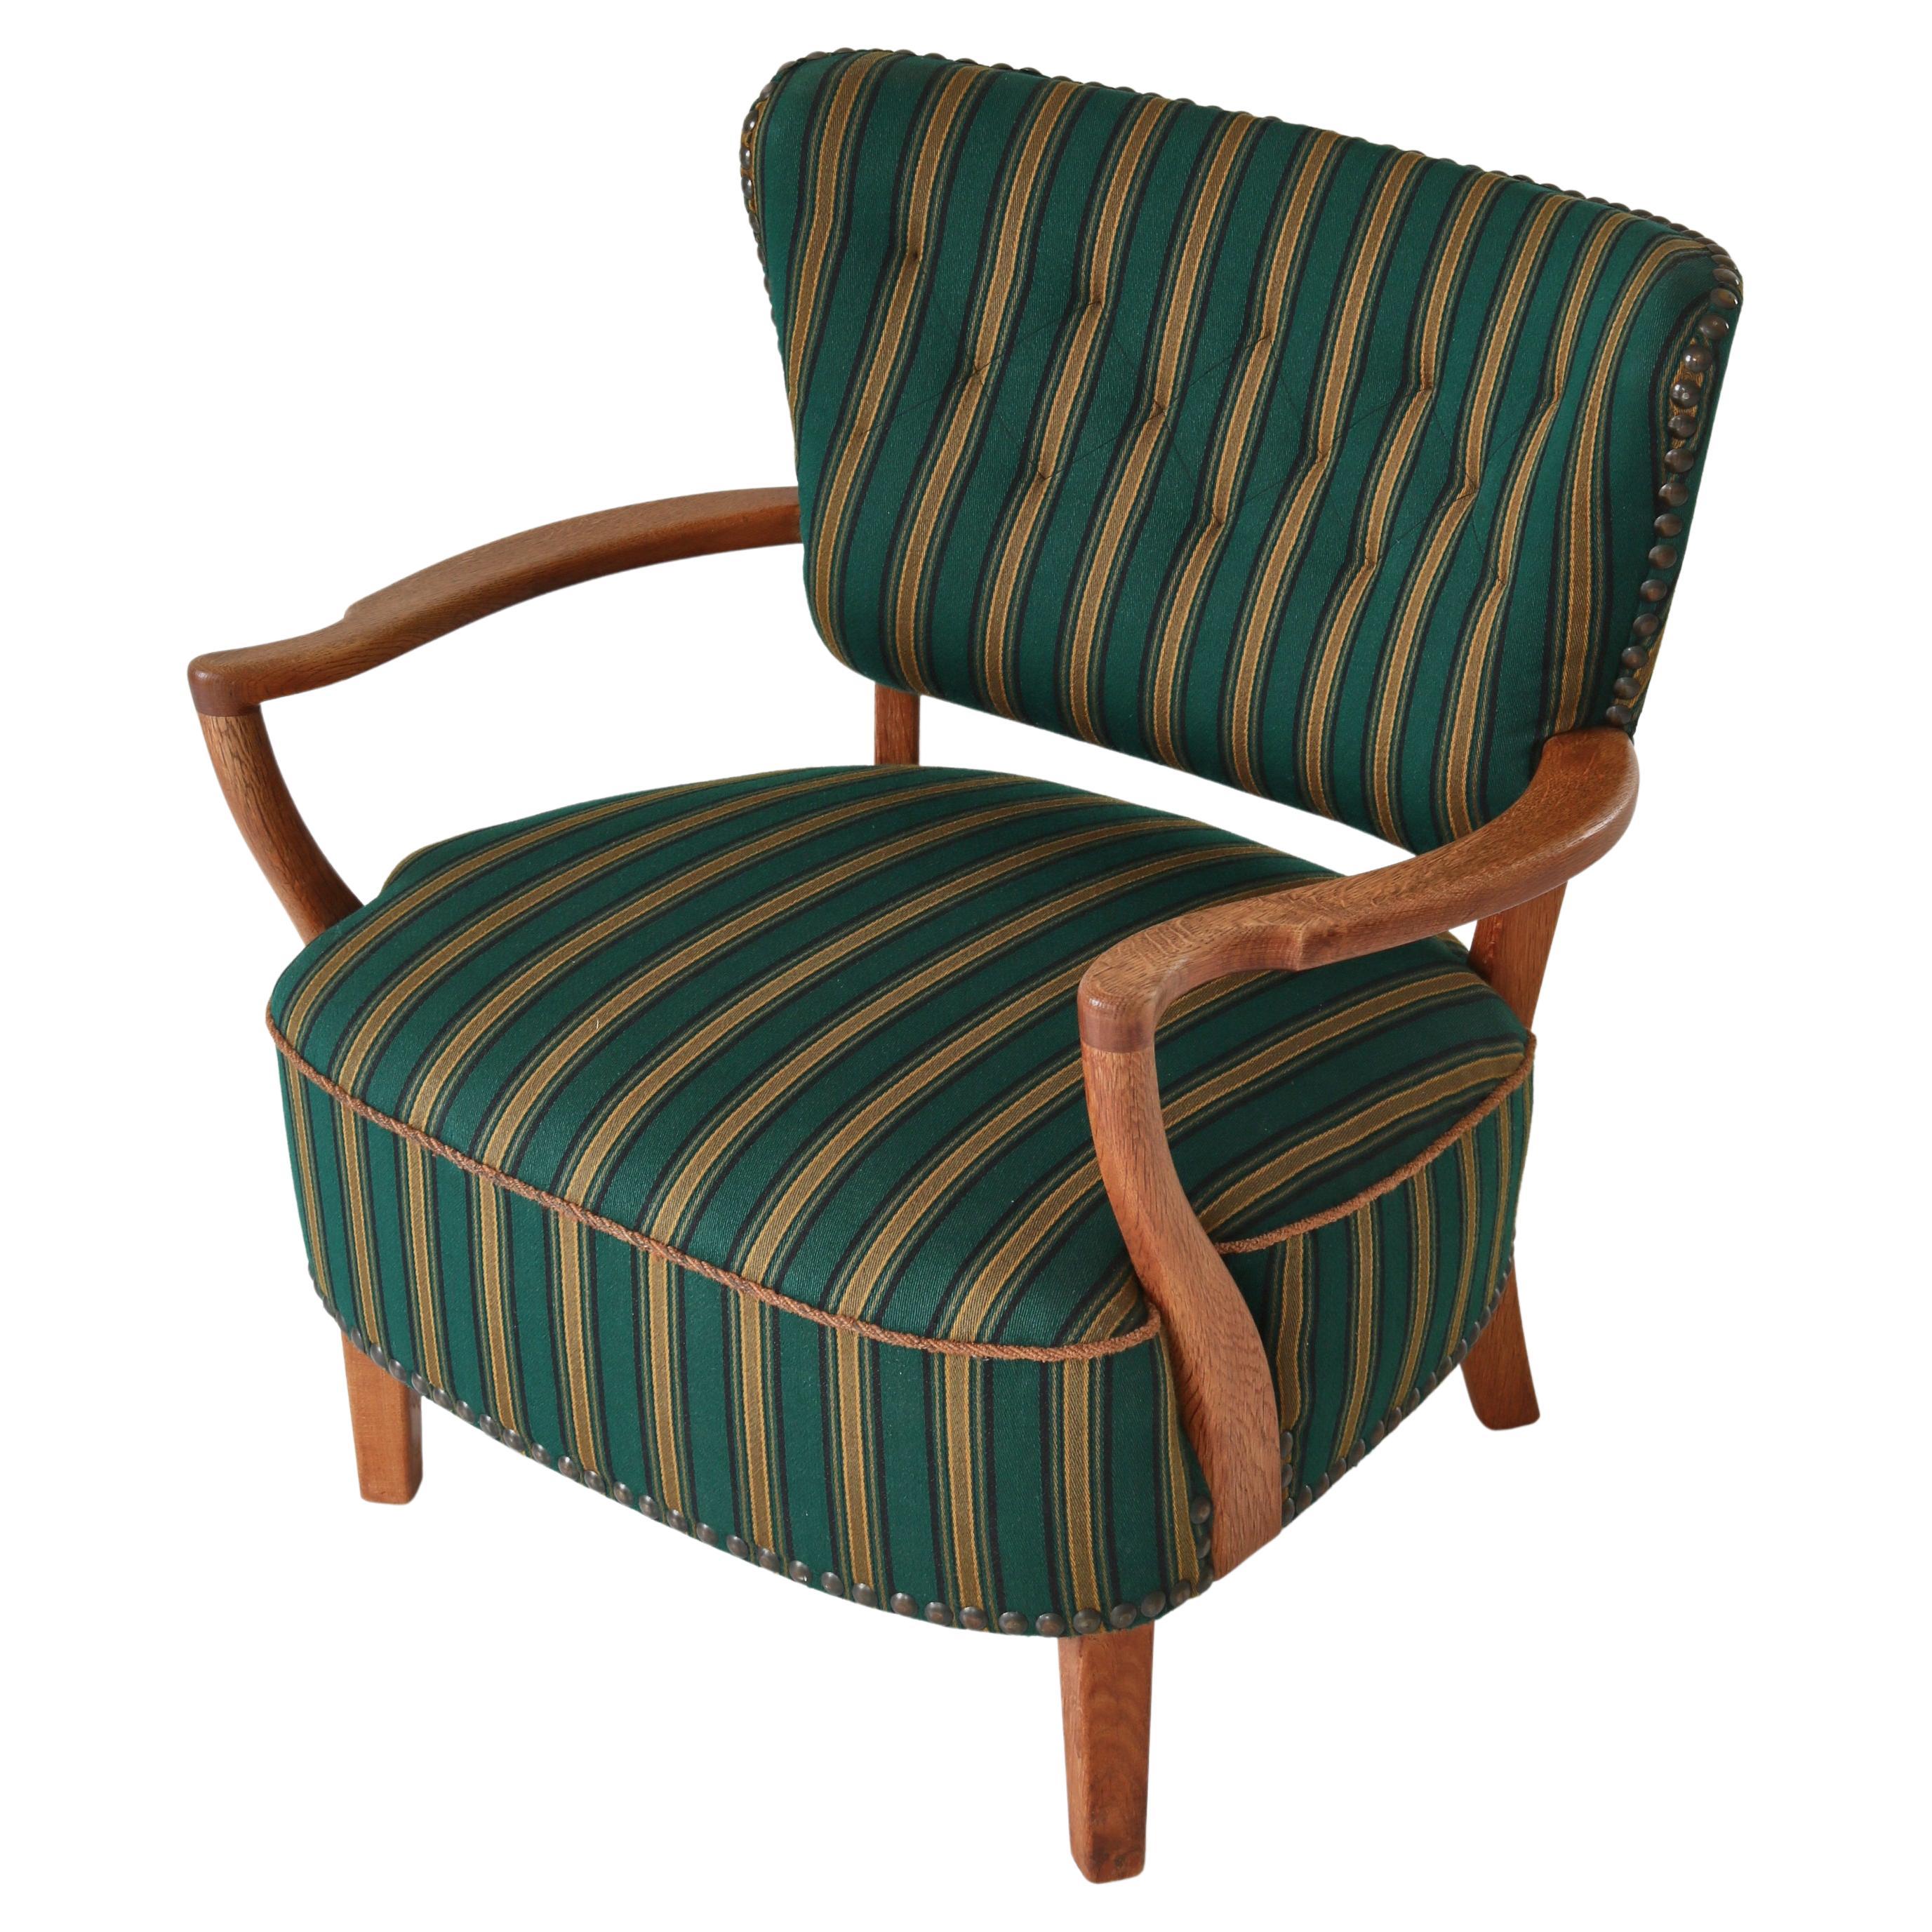 Danish Modern Lounge Chair in Oak & Traditional Danish Olmerdug Wool, 1950s